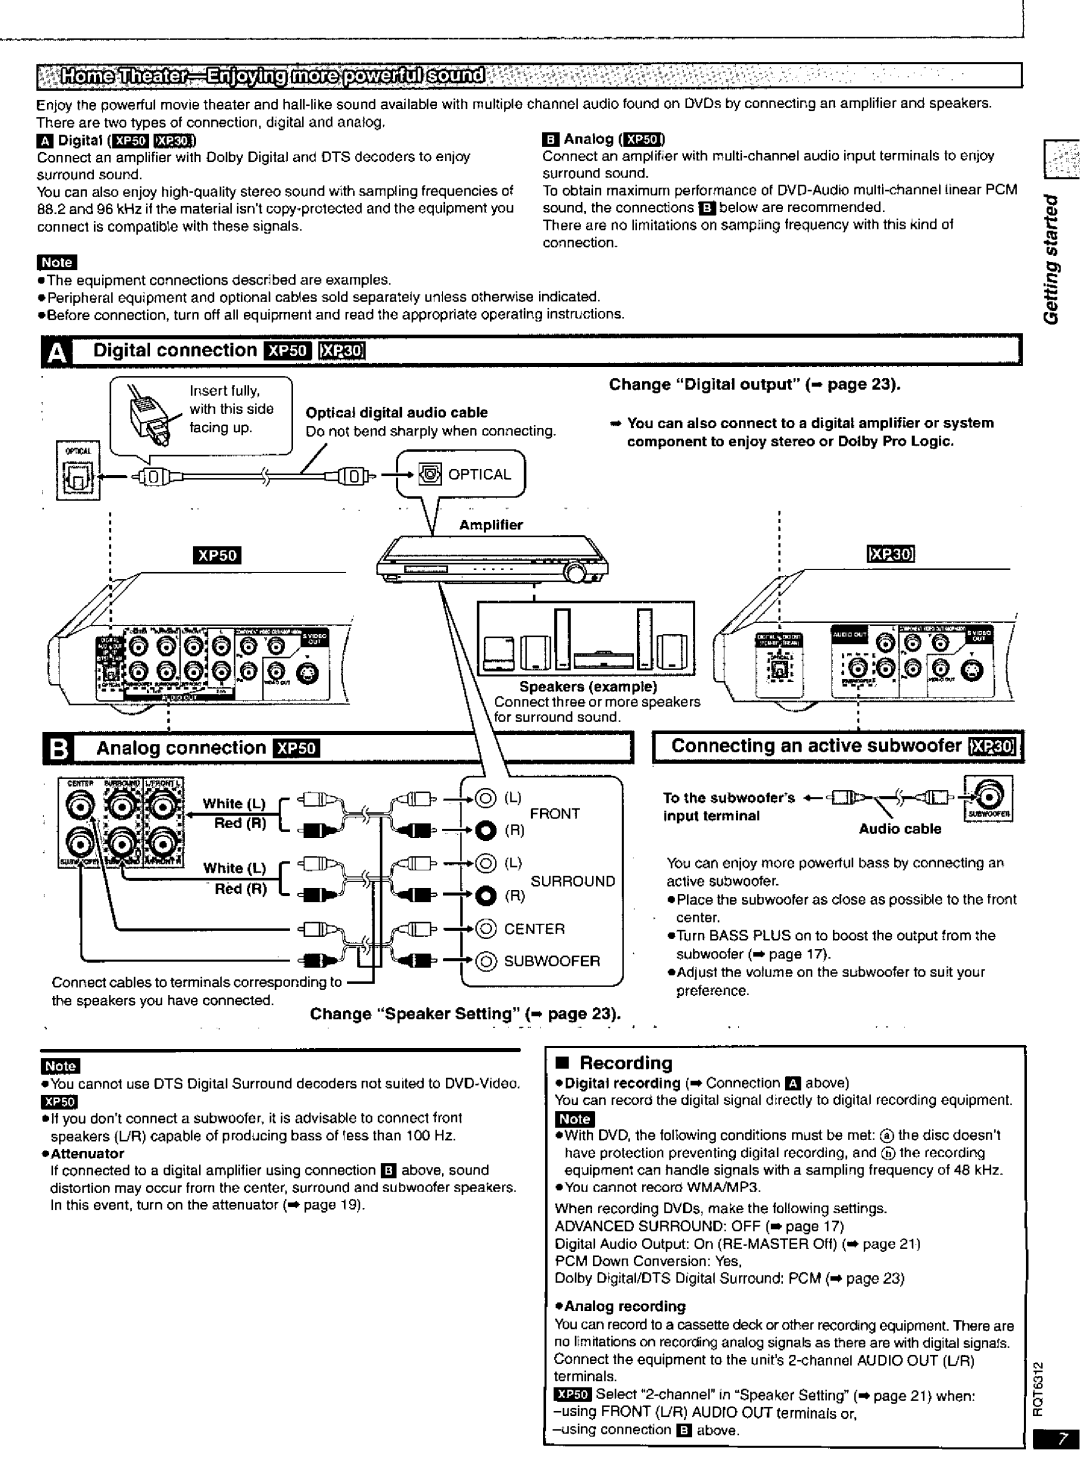 Panasonic DVD-XP50, DVD-XP30 manual 